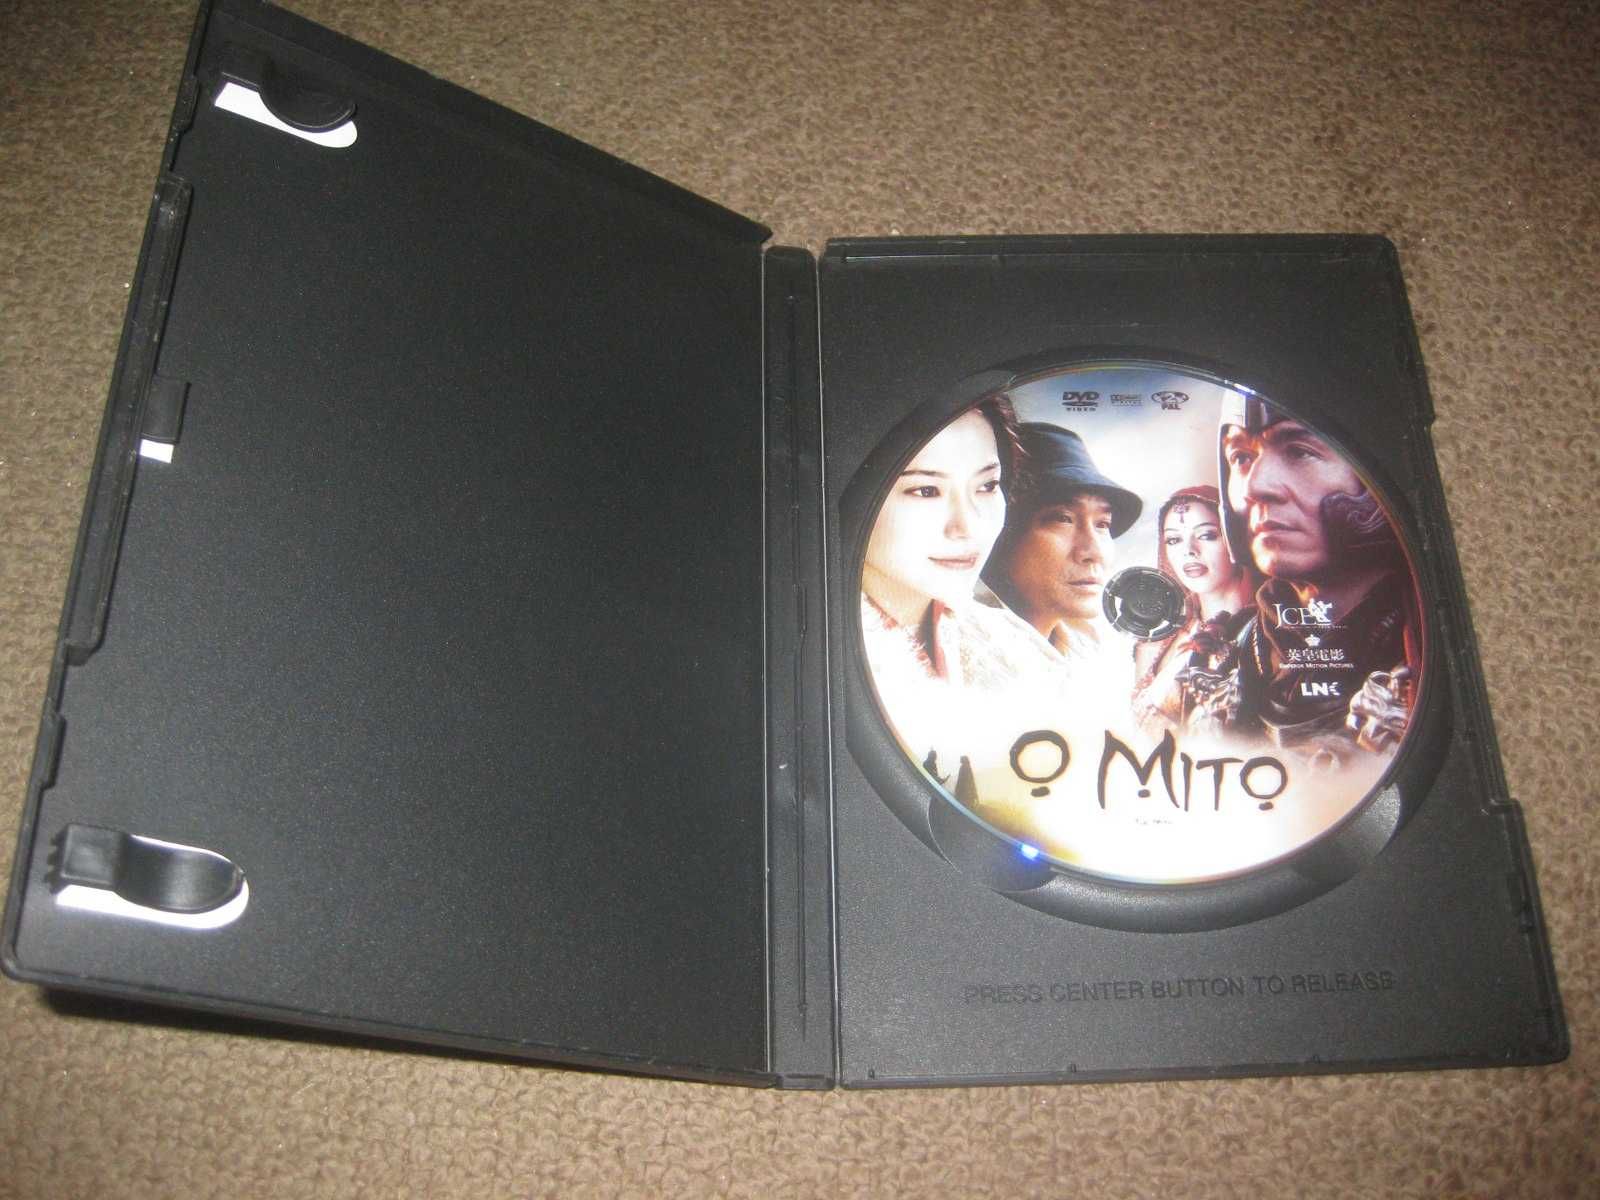 DVD "O Mito" com Jackie Chan